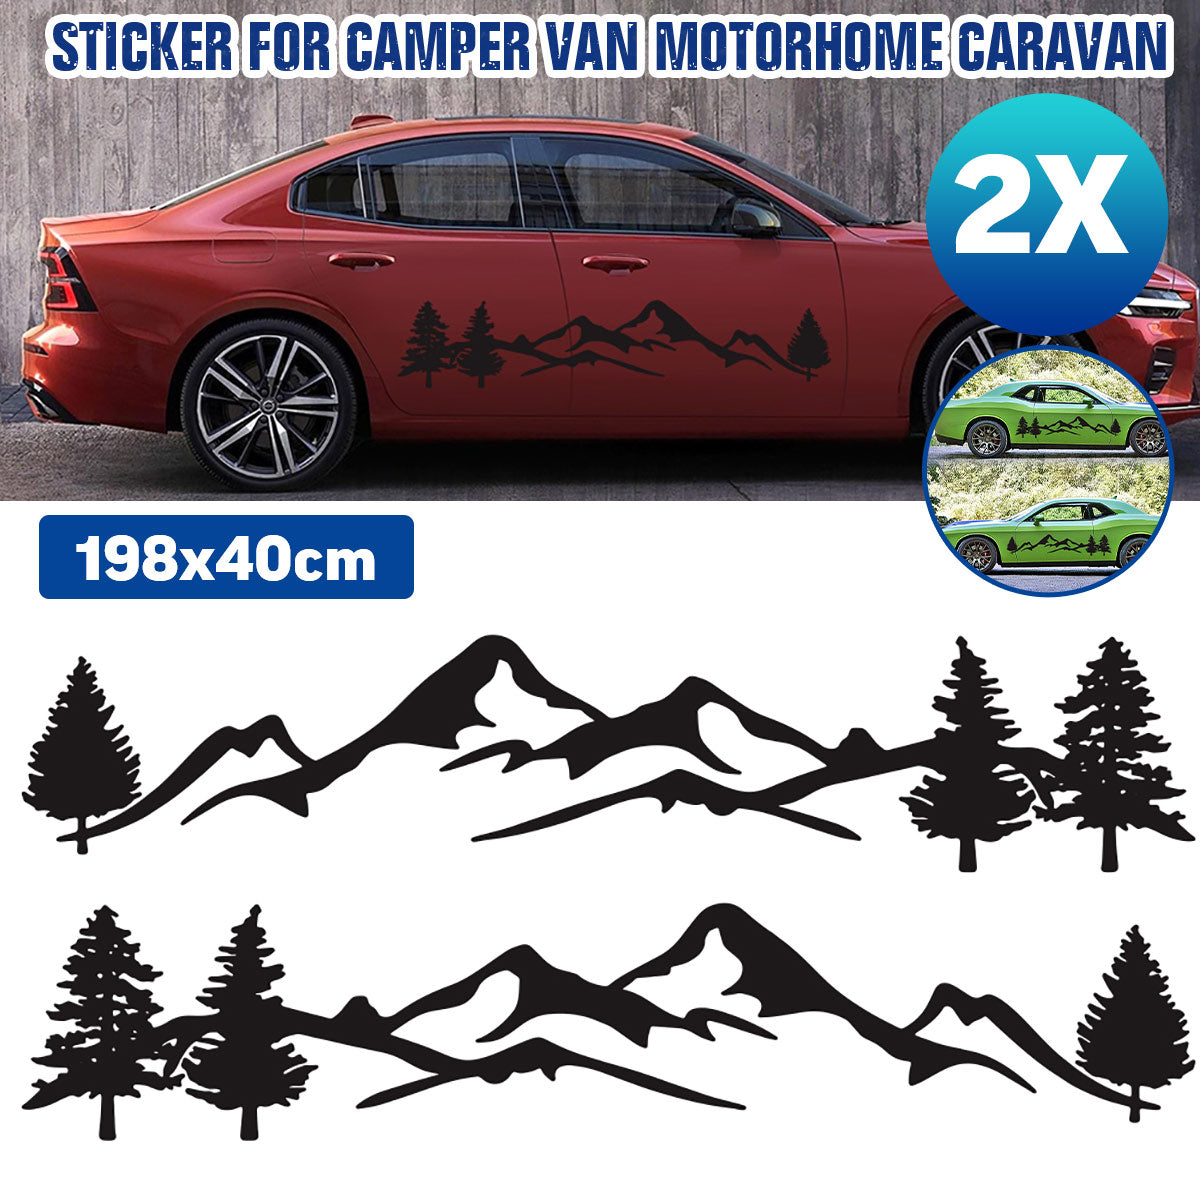 Saddle Brown 2pcs Side Body Stickers Decal Mountain & Tree For Camper Van Motorhome Car Caravan Boat